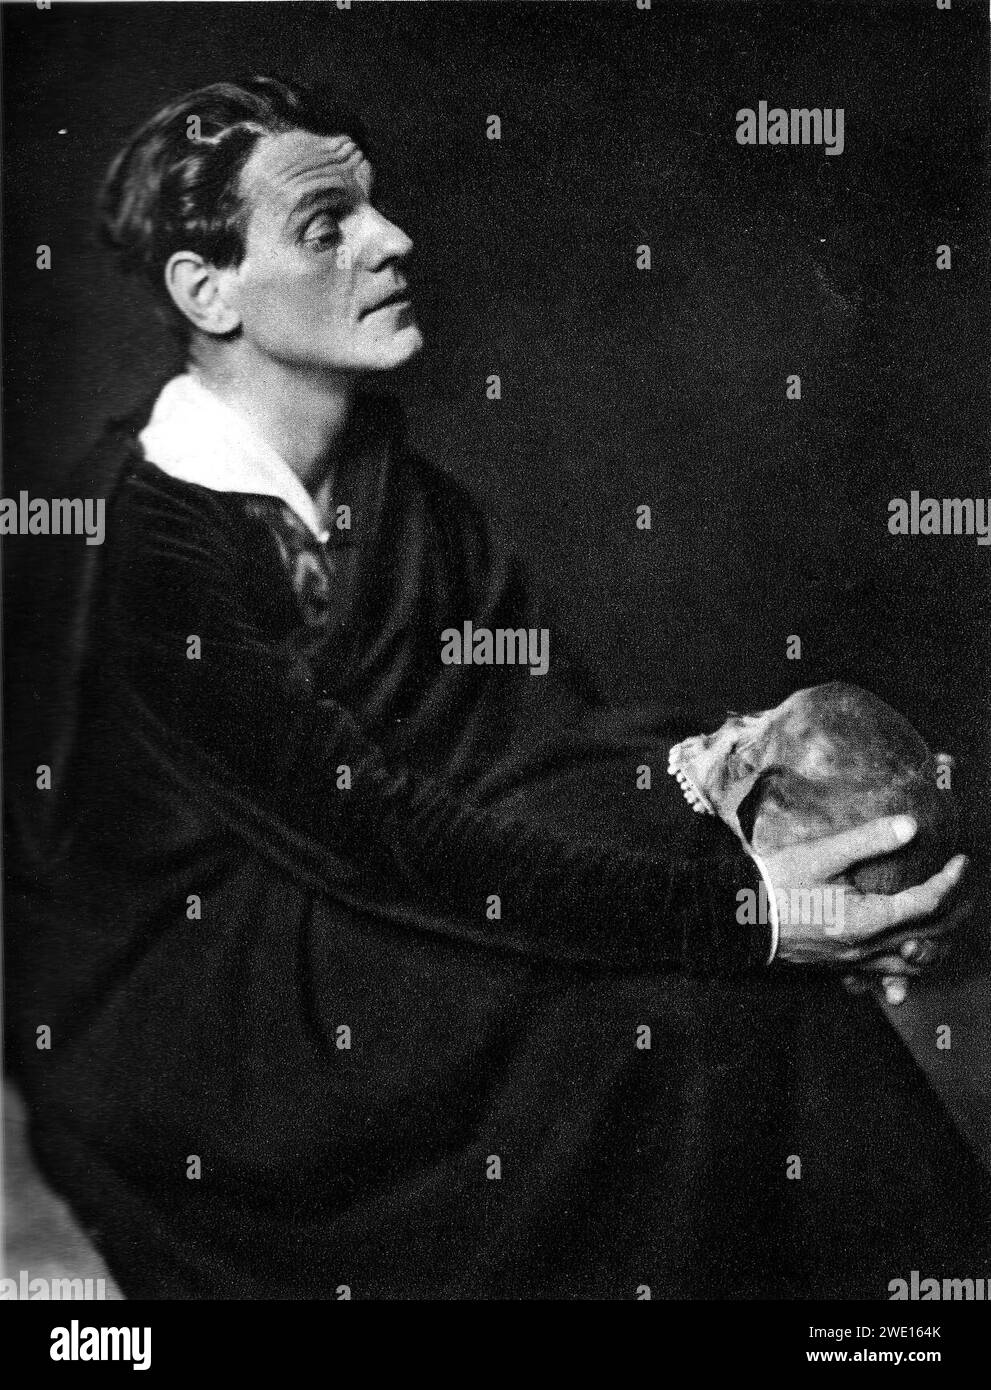 Alexander Moissi als Hamlet, Wien 1925, Aufnahme Kolliner. Stock Photo